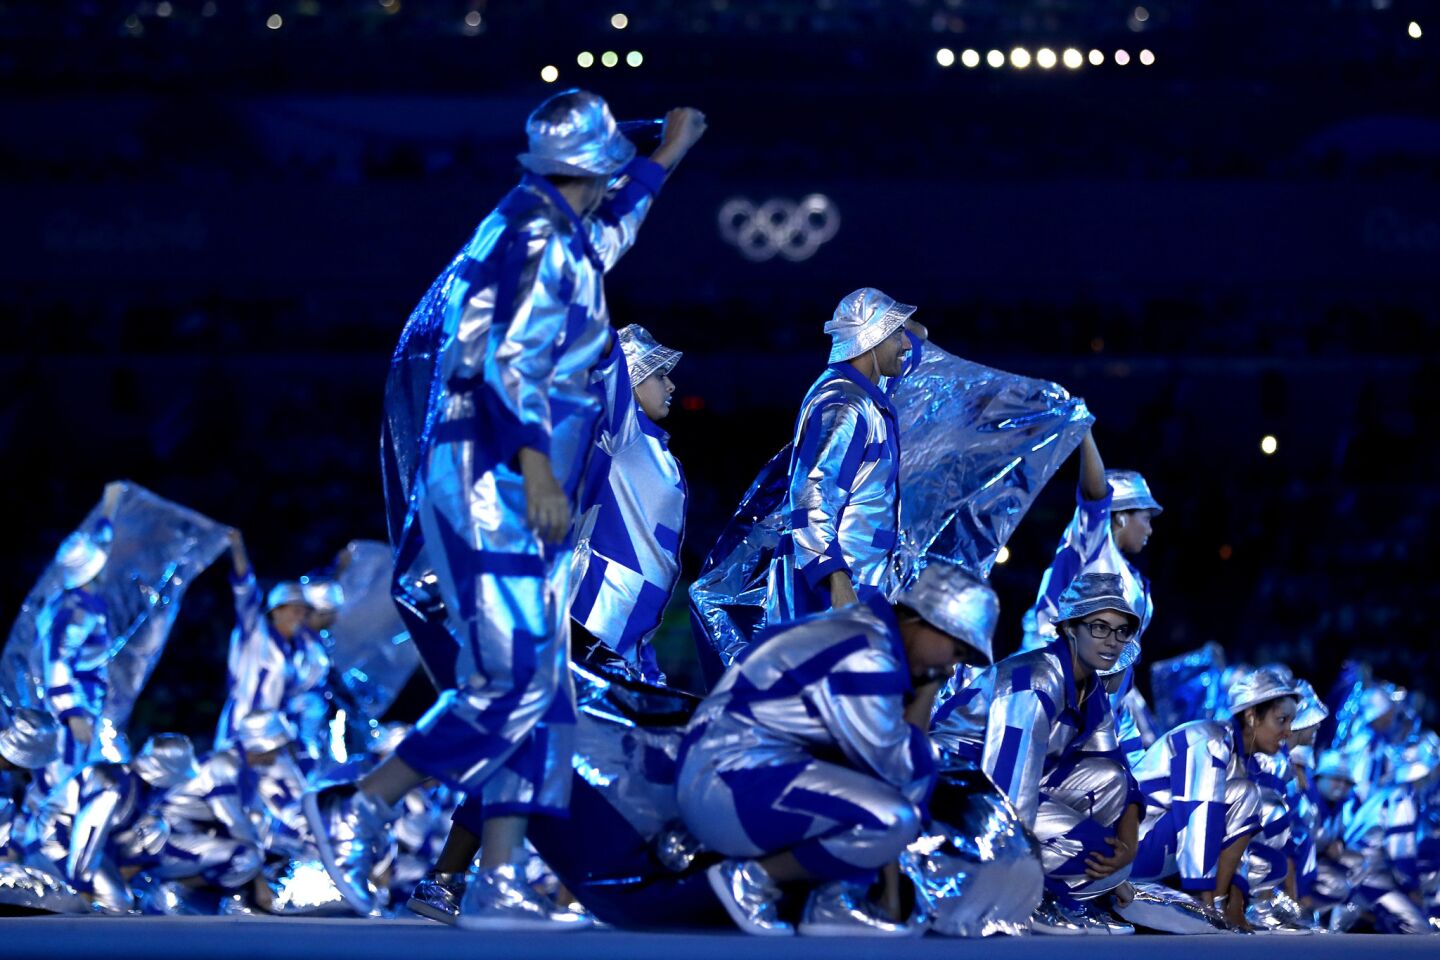 Rio Summer Olympics opening ceremony